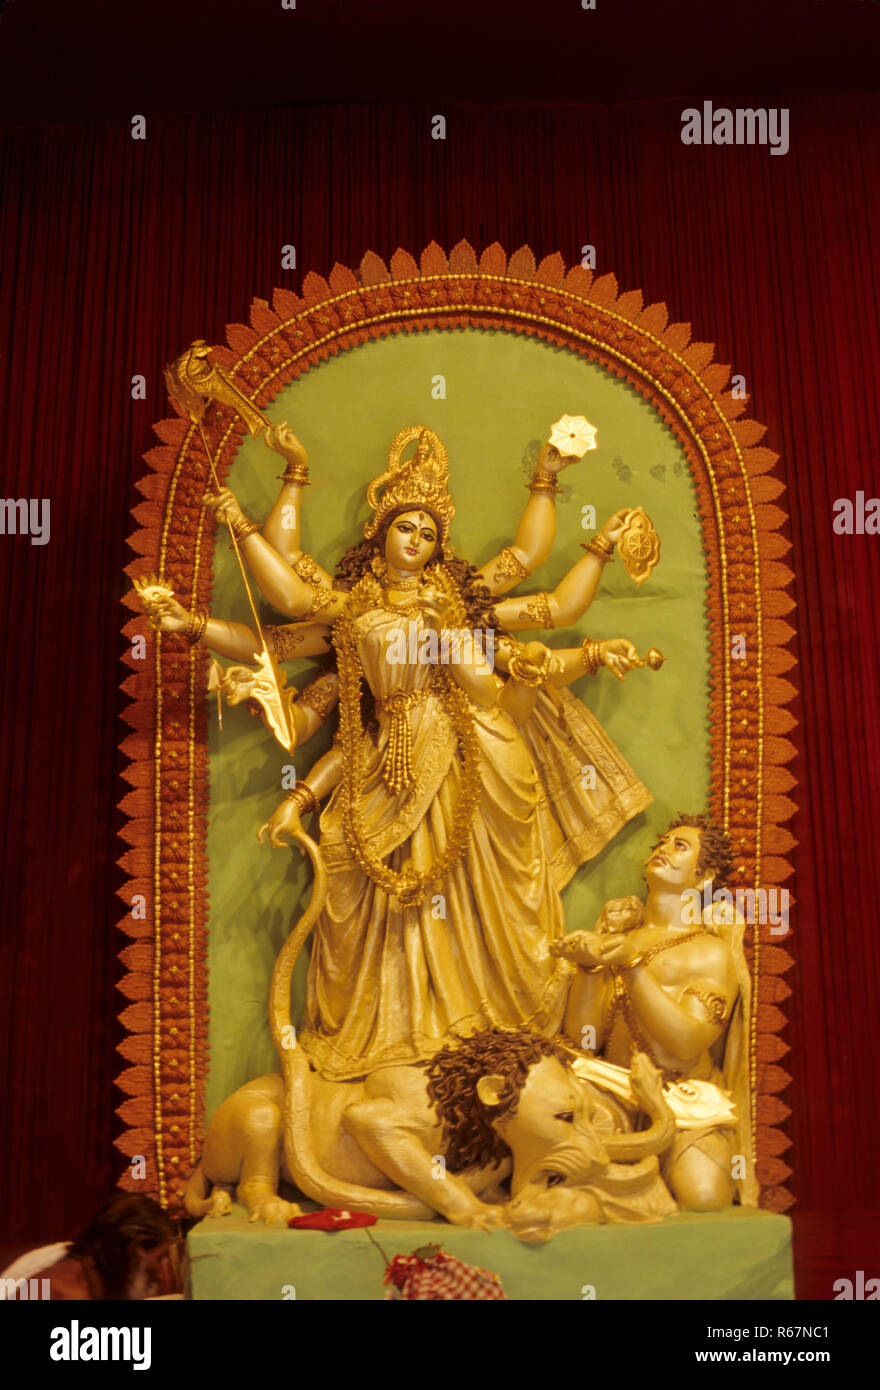 Goddess Durga Pooja puja Procession Homage To The Mother Goddess during the  nine days of Navaratri Festival Stock Photo - Alamy